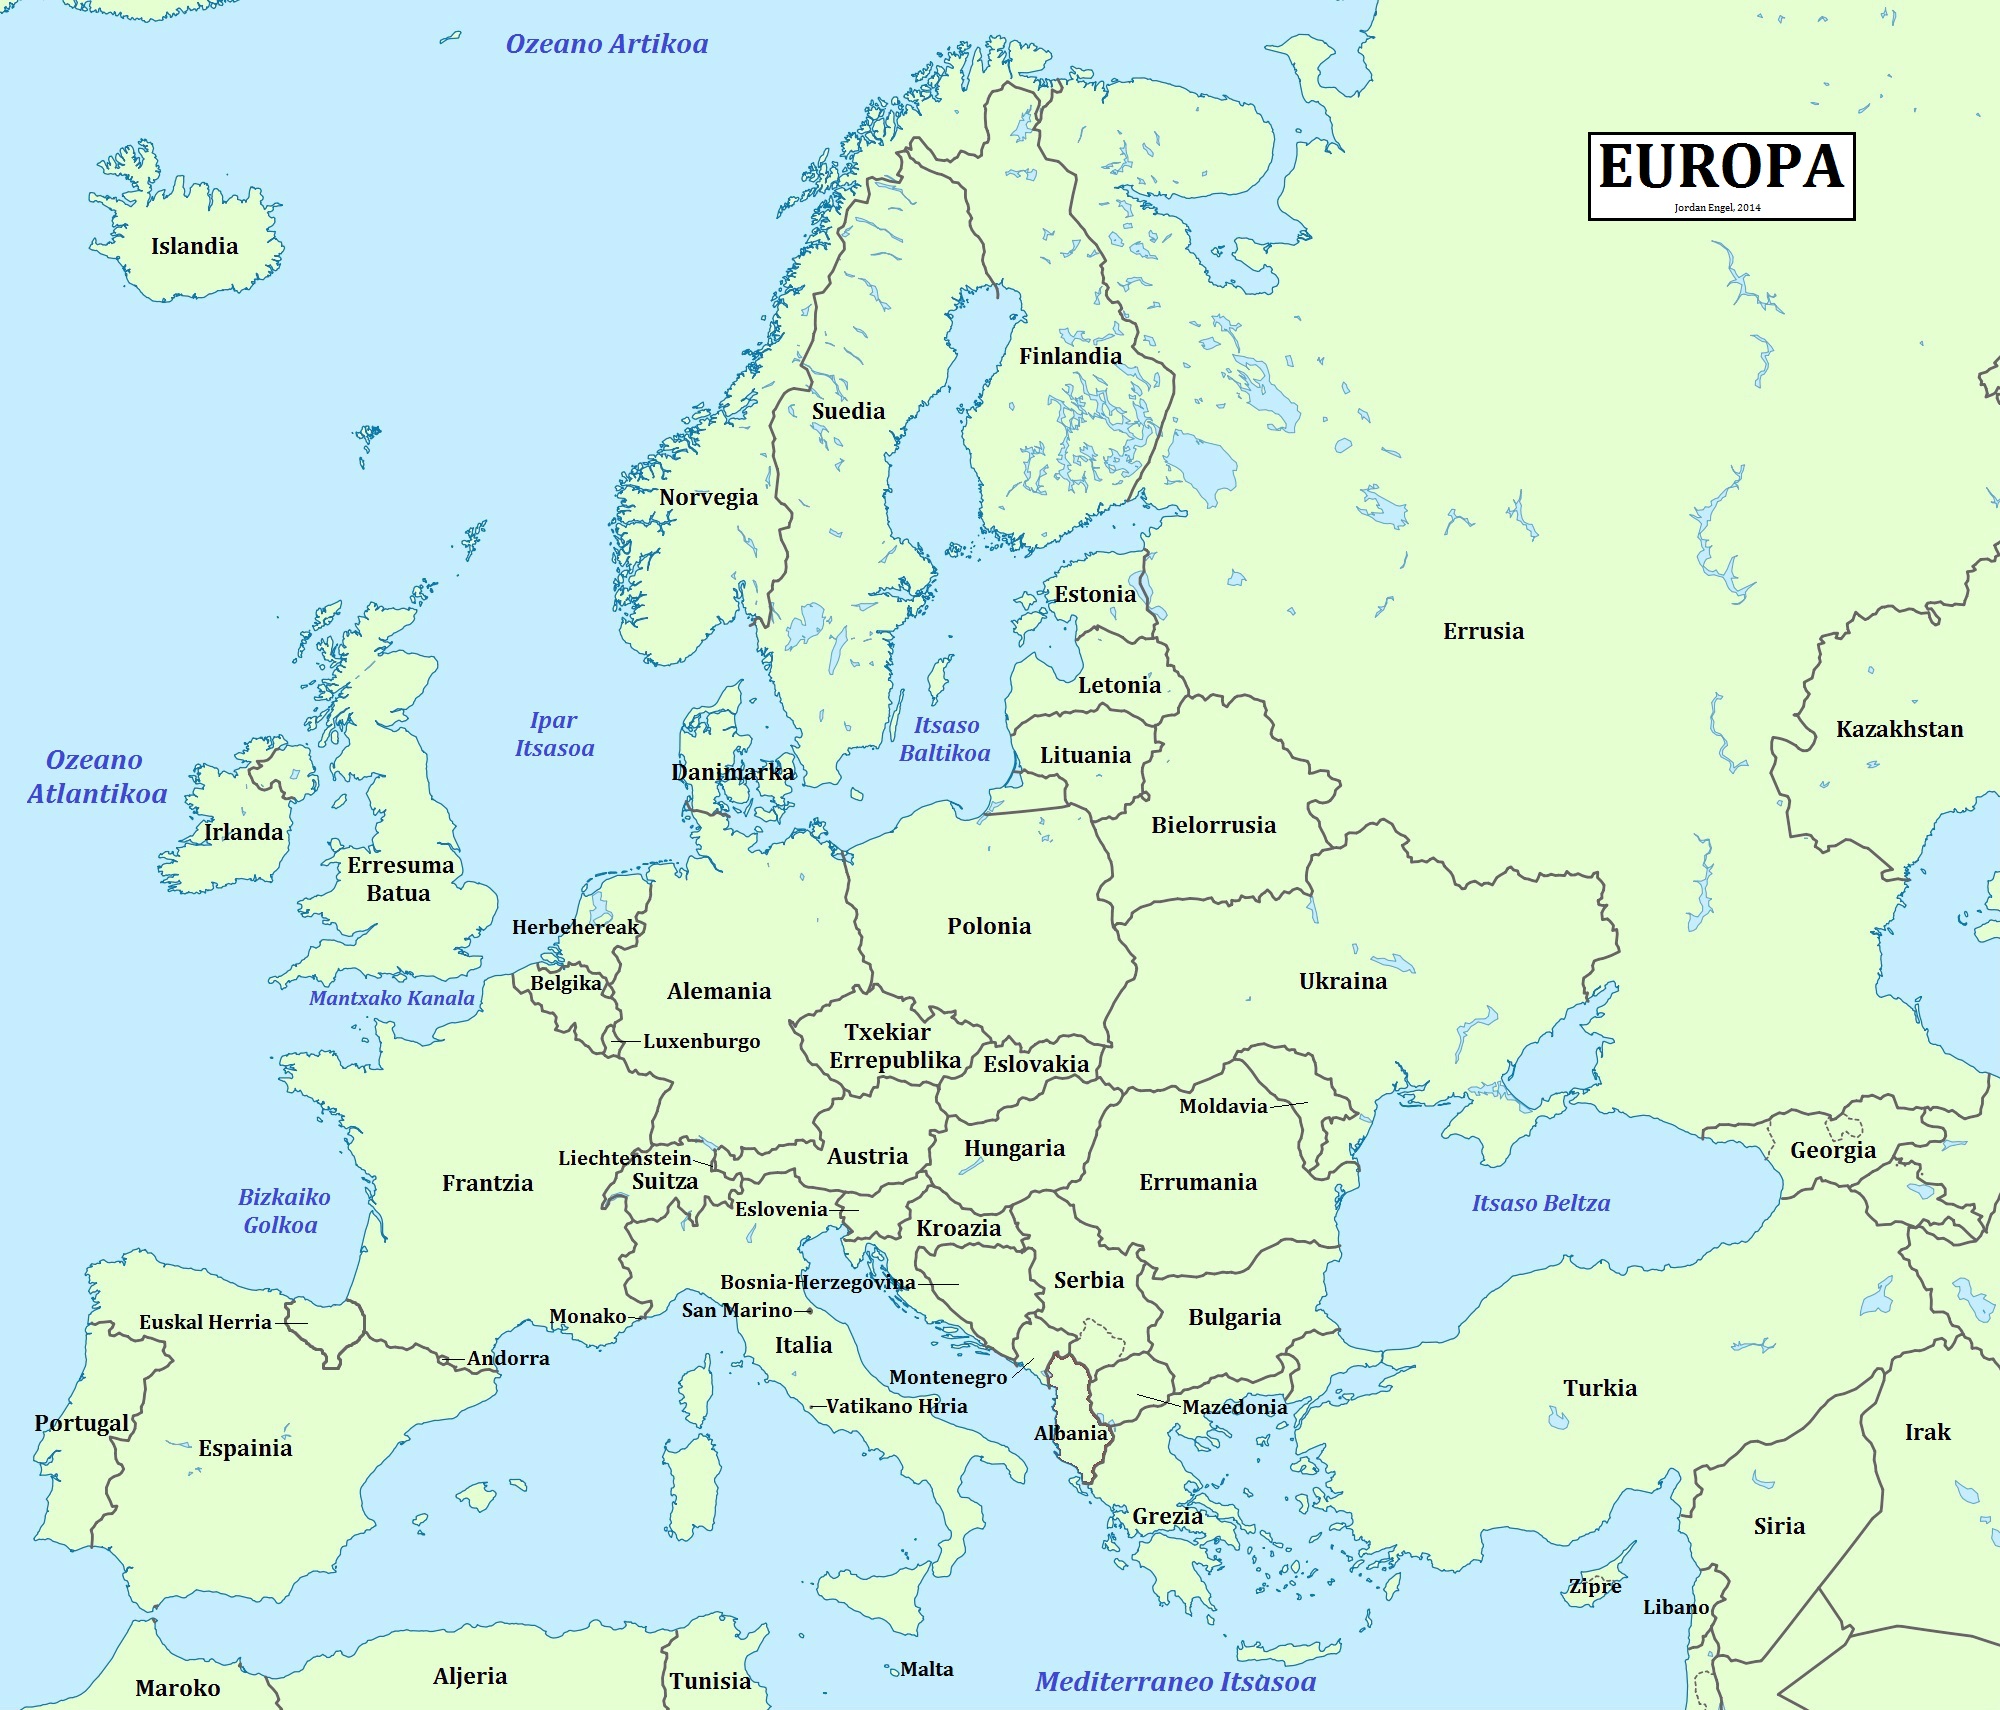 Europe: A Basque – The